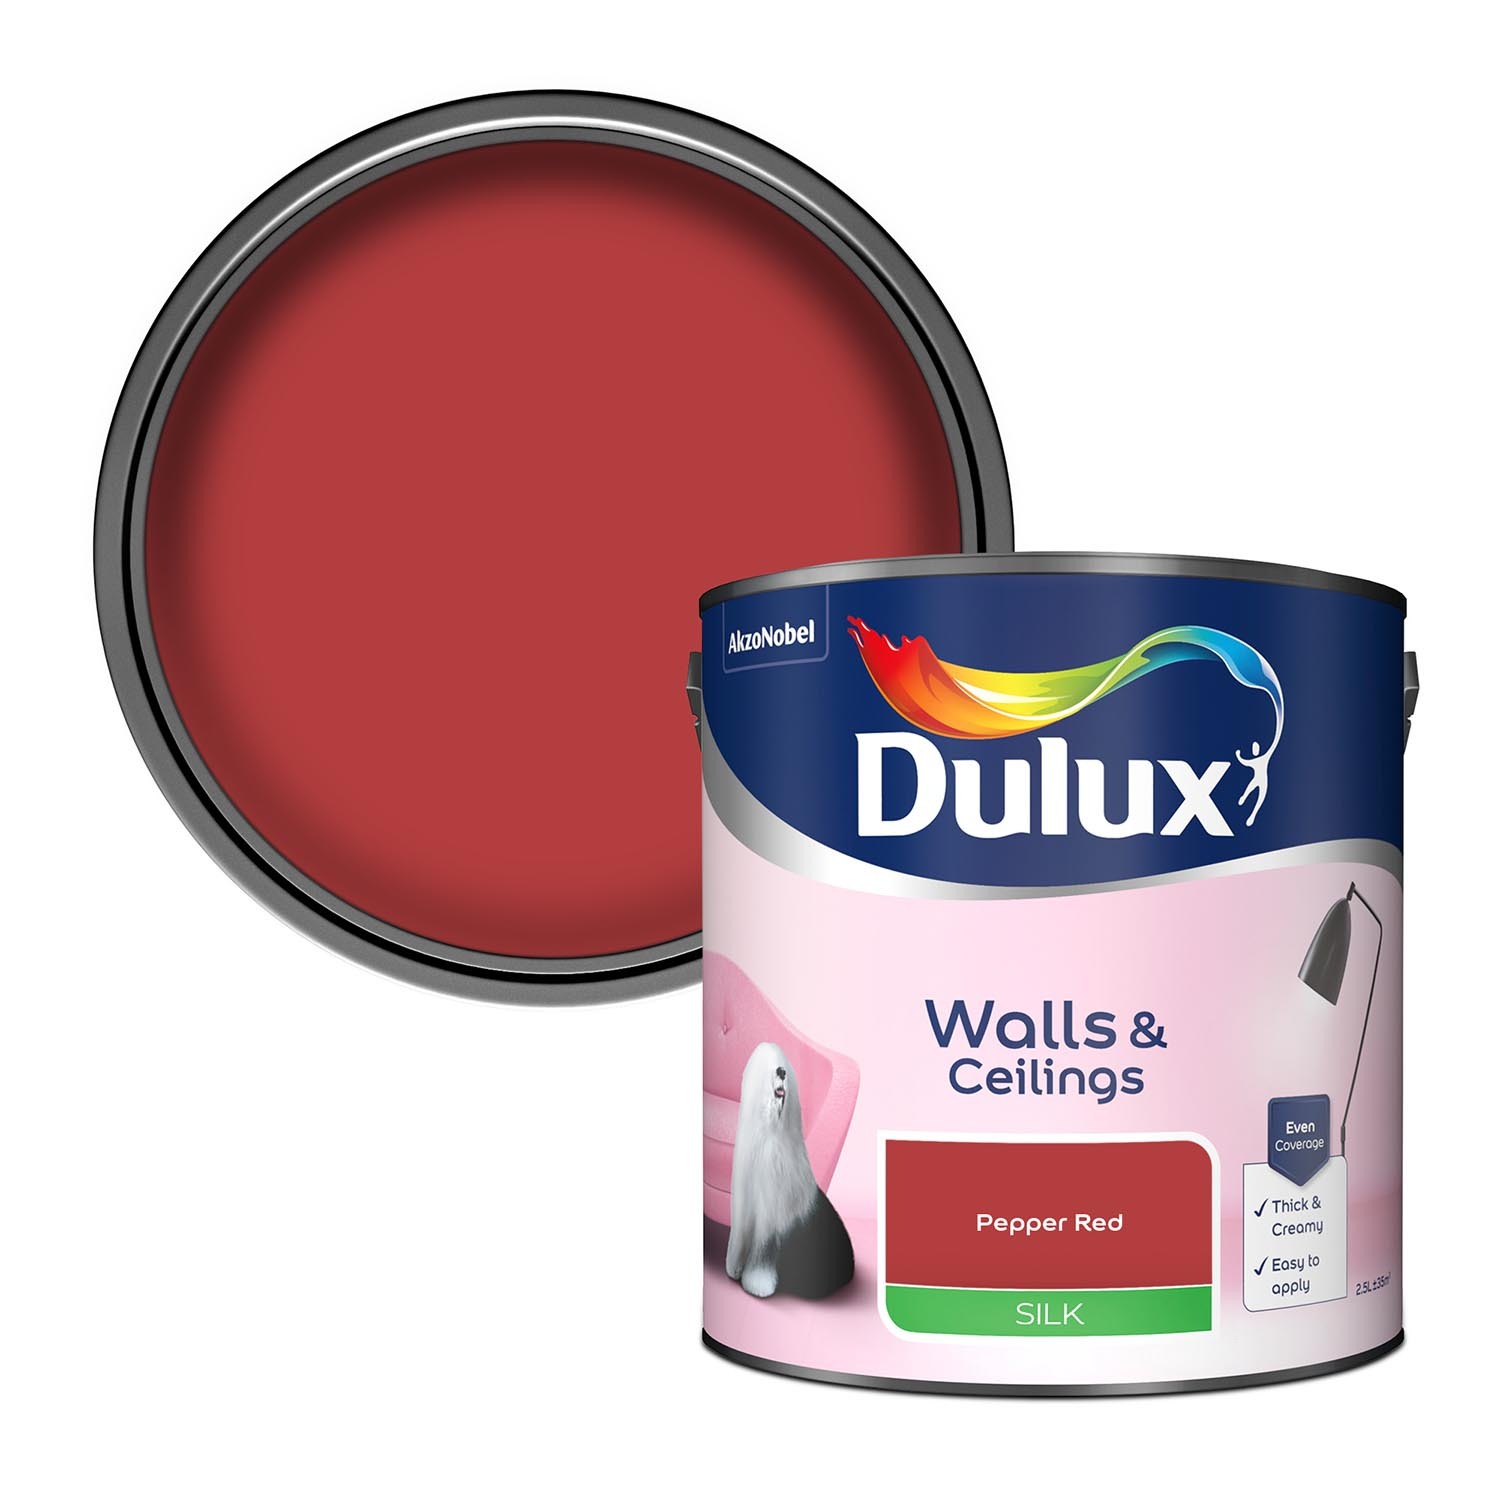 Dulux Walls & Ceilings Pepper Red Silk Emulsion Paint 2.5L Image 1